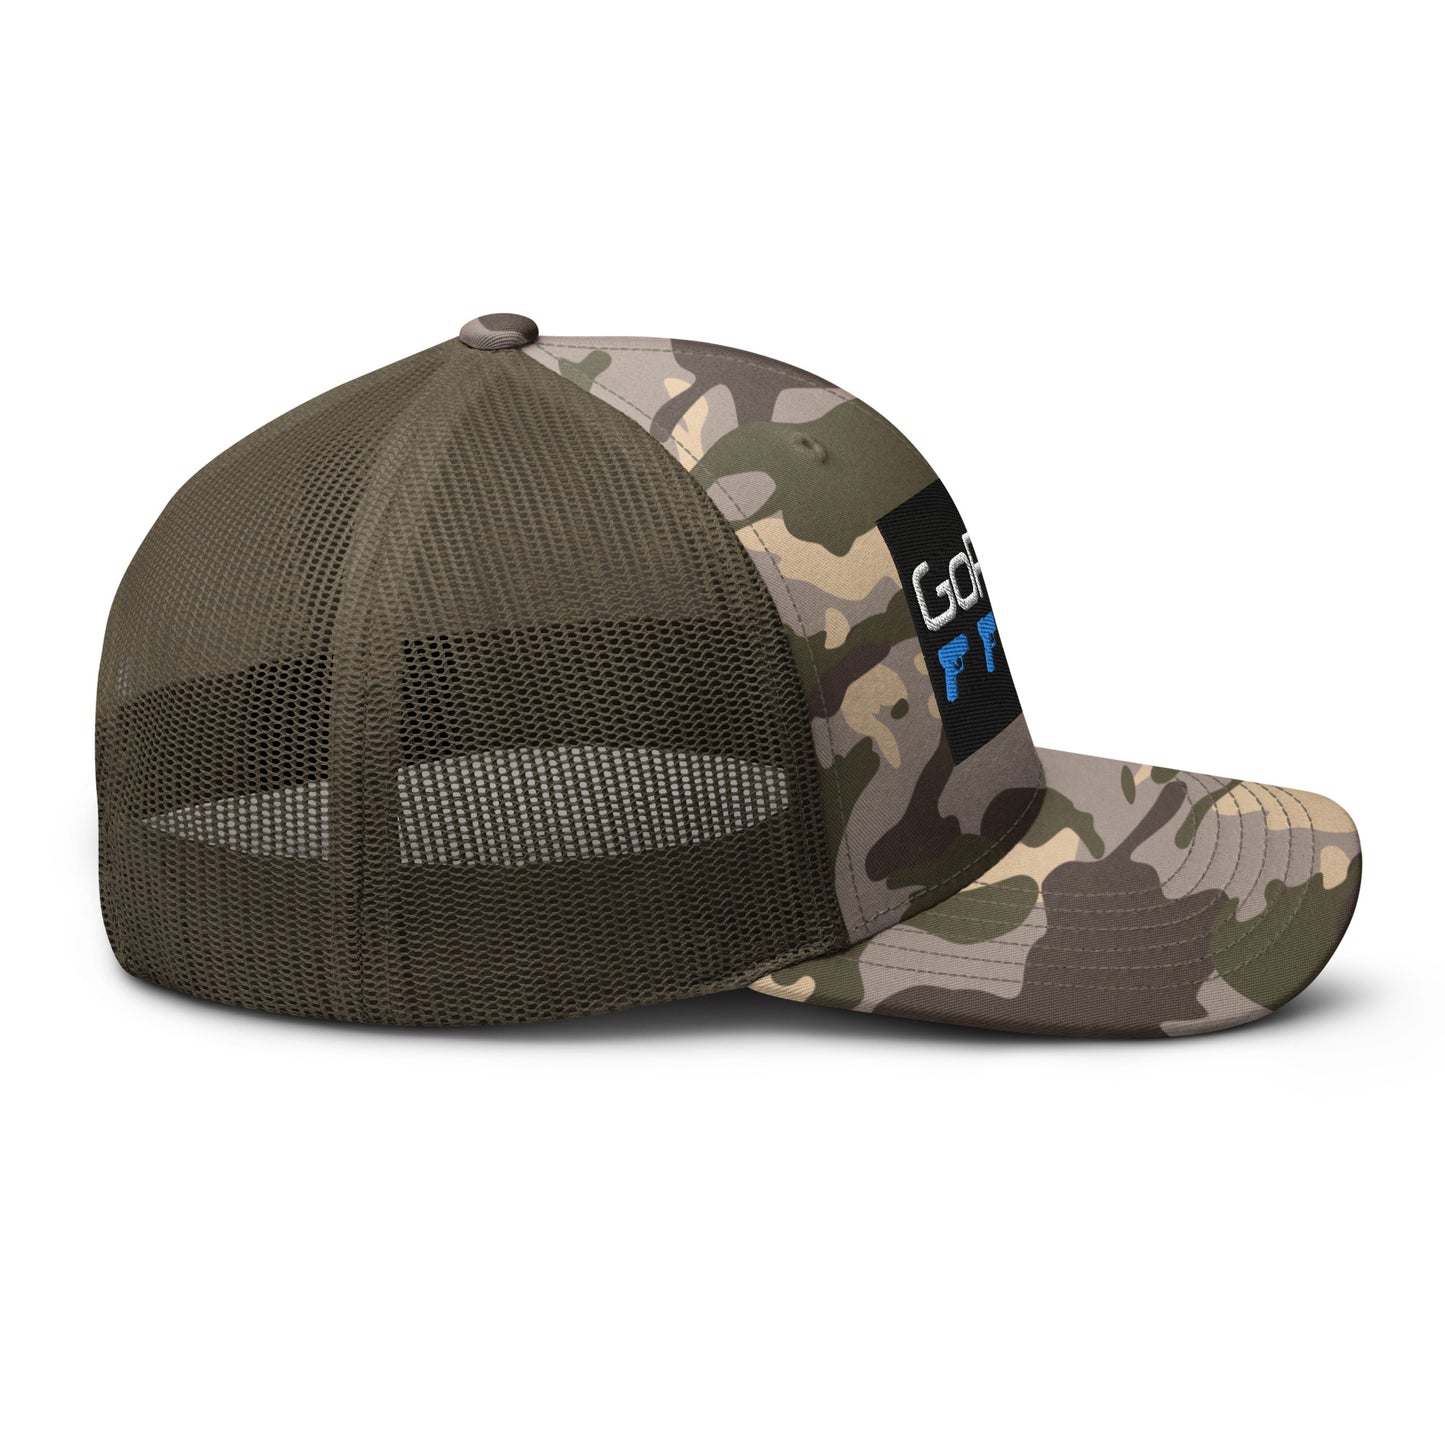 Go Pew Pistols Camouflage trucker hat